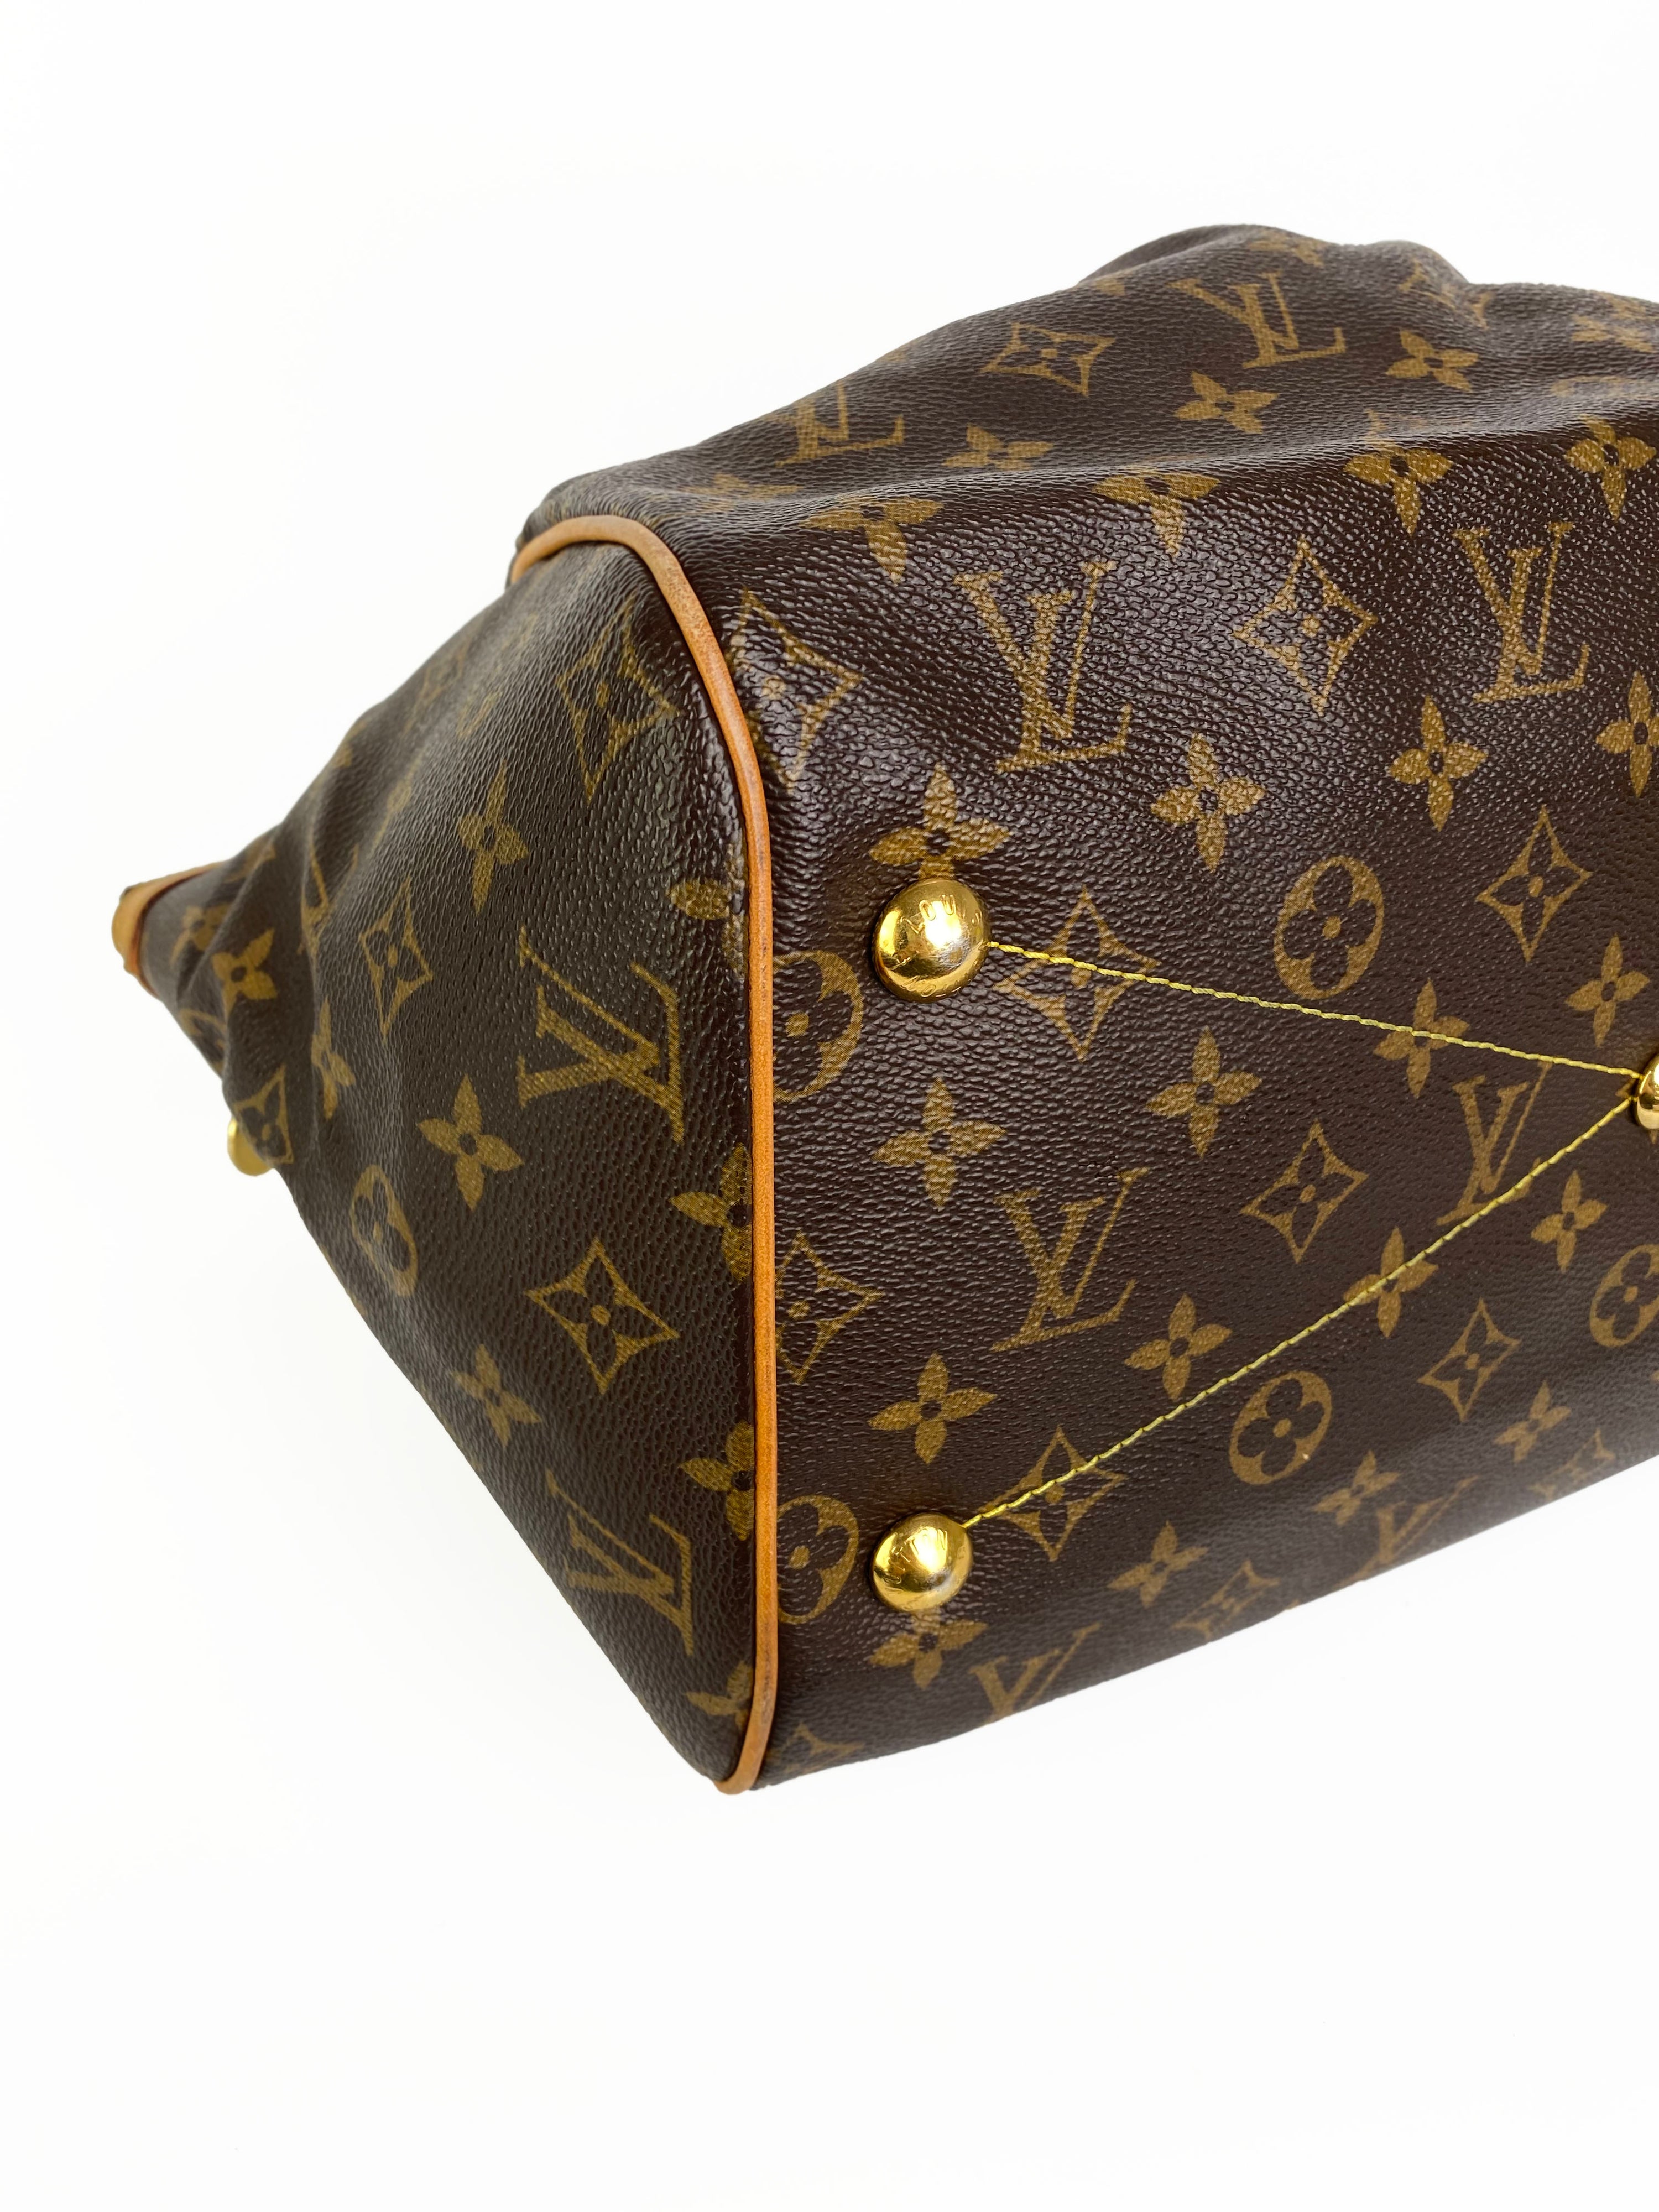 Louis Vuitton Vintage Tivoli GM Bag